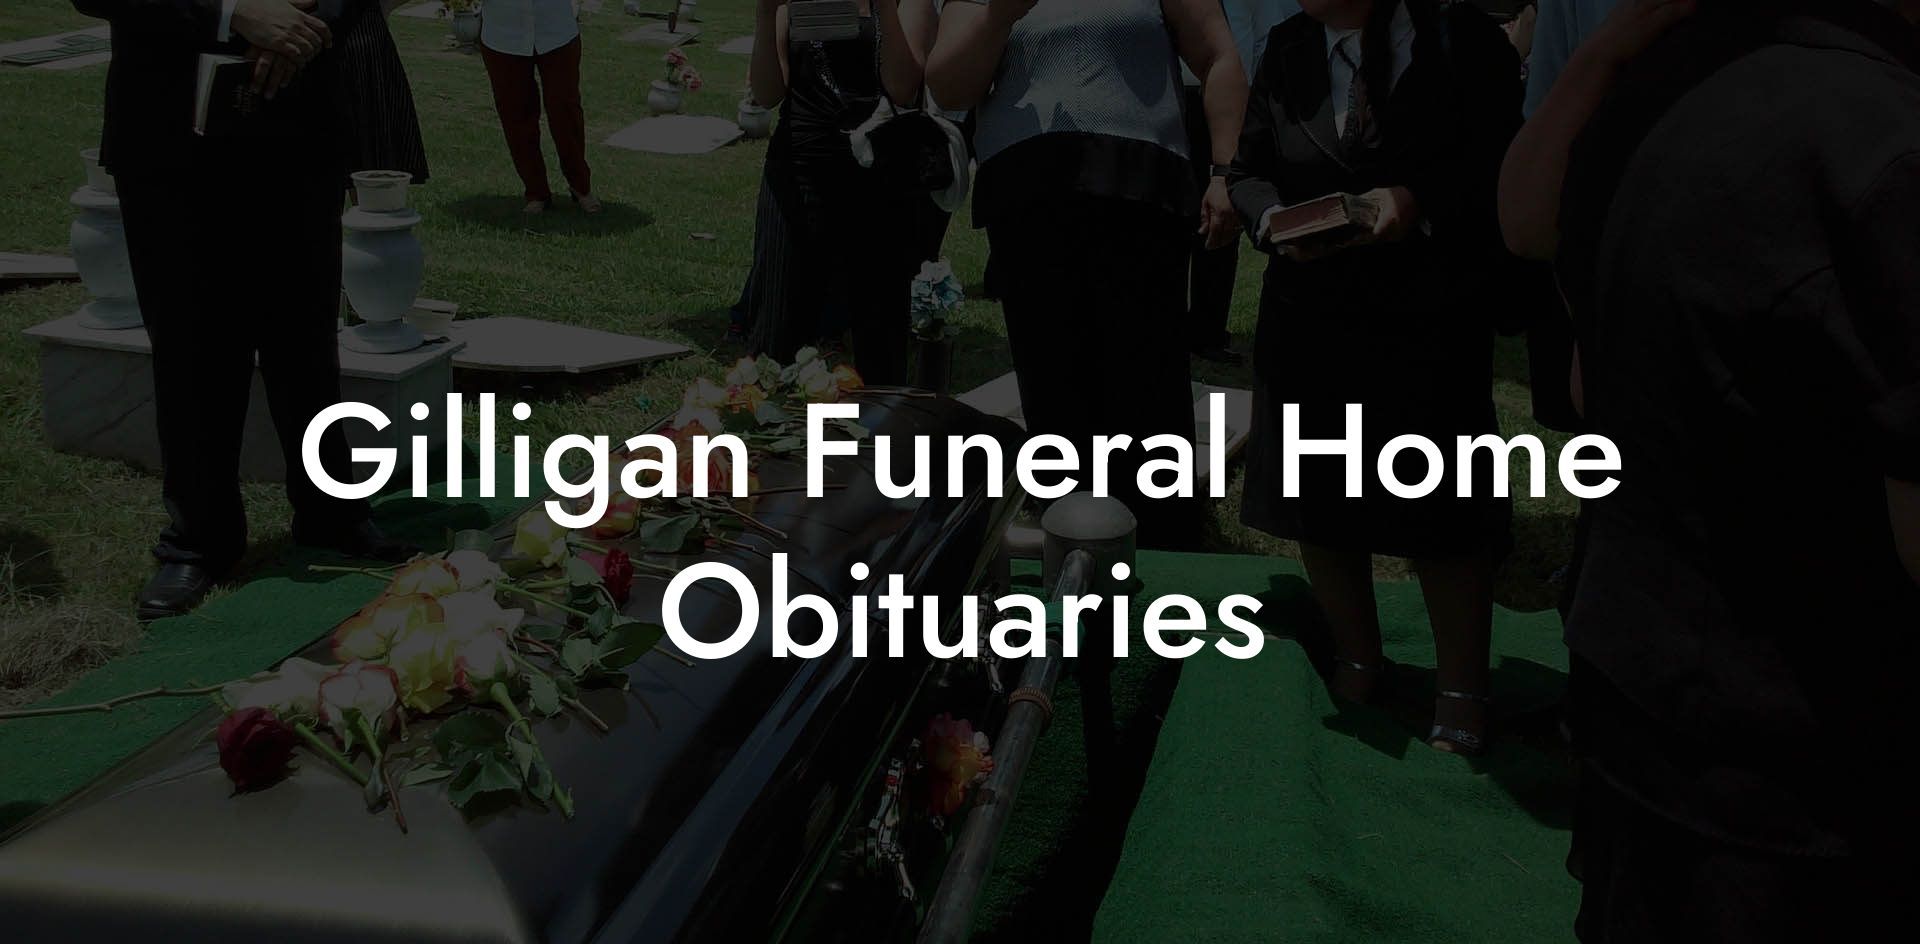 Gilligan Funeral Home Obituaries